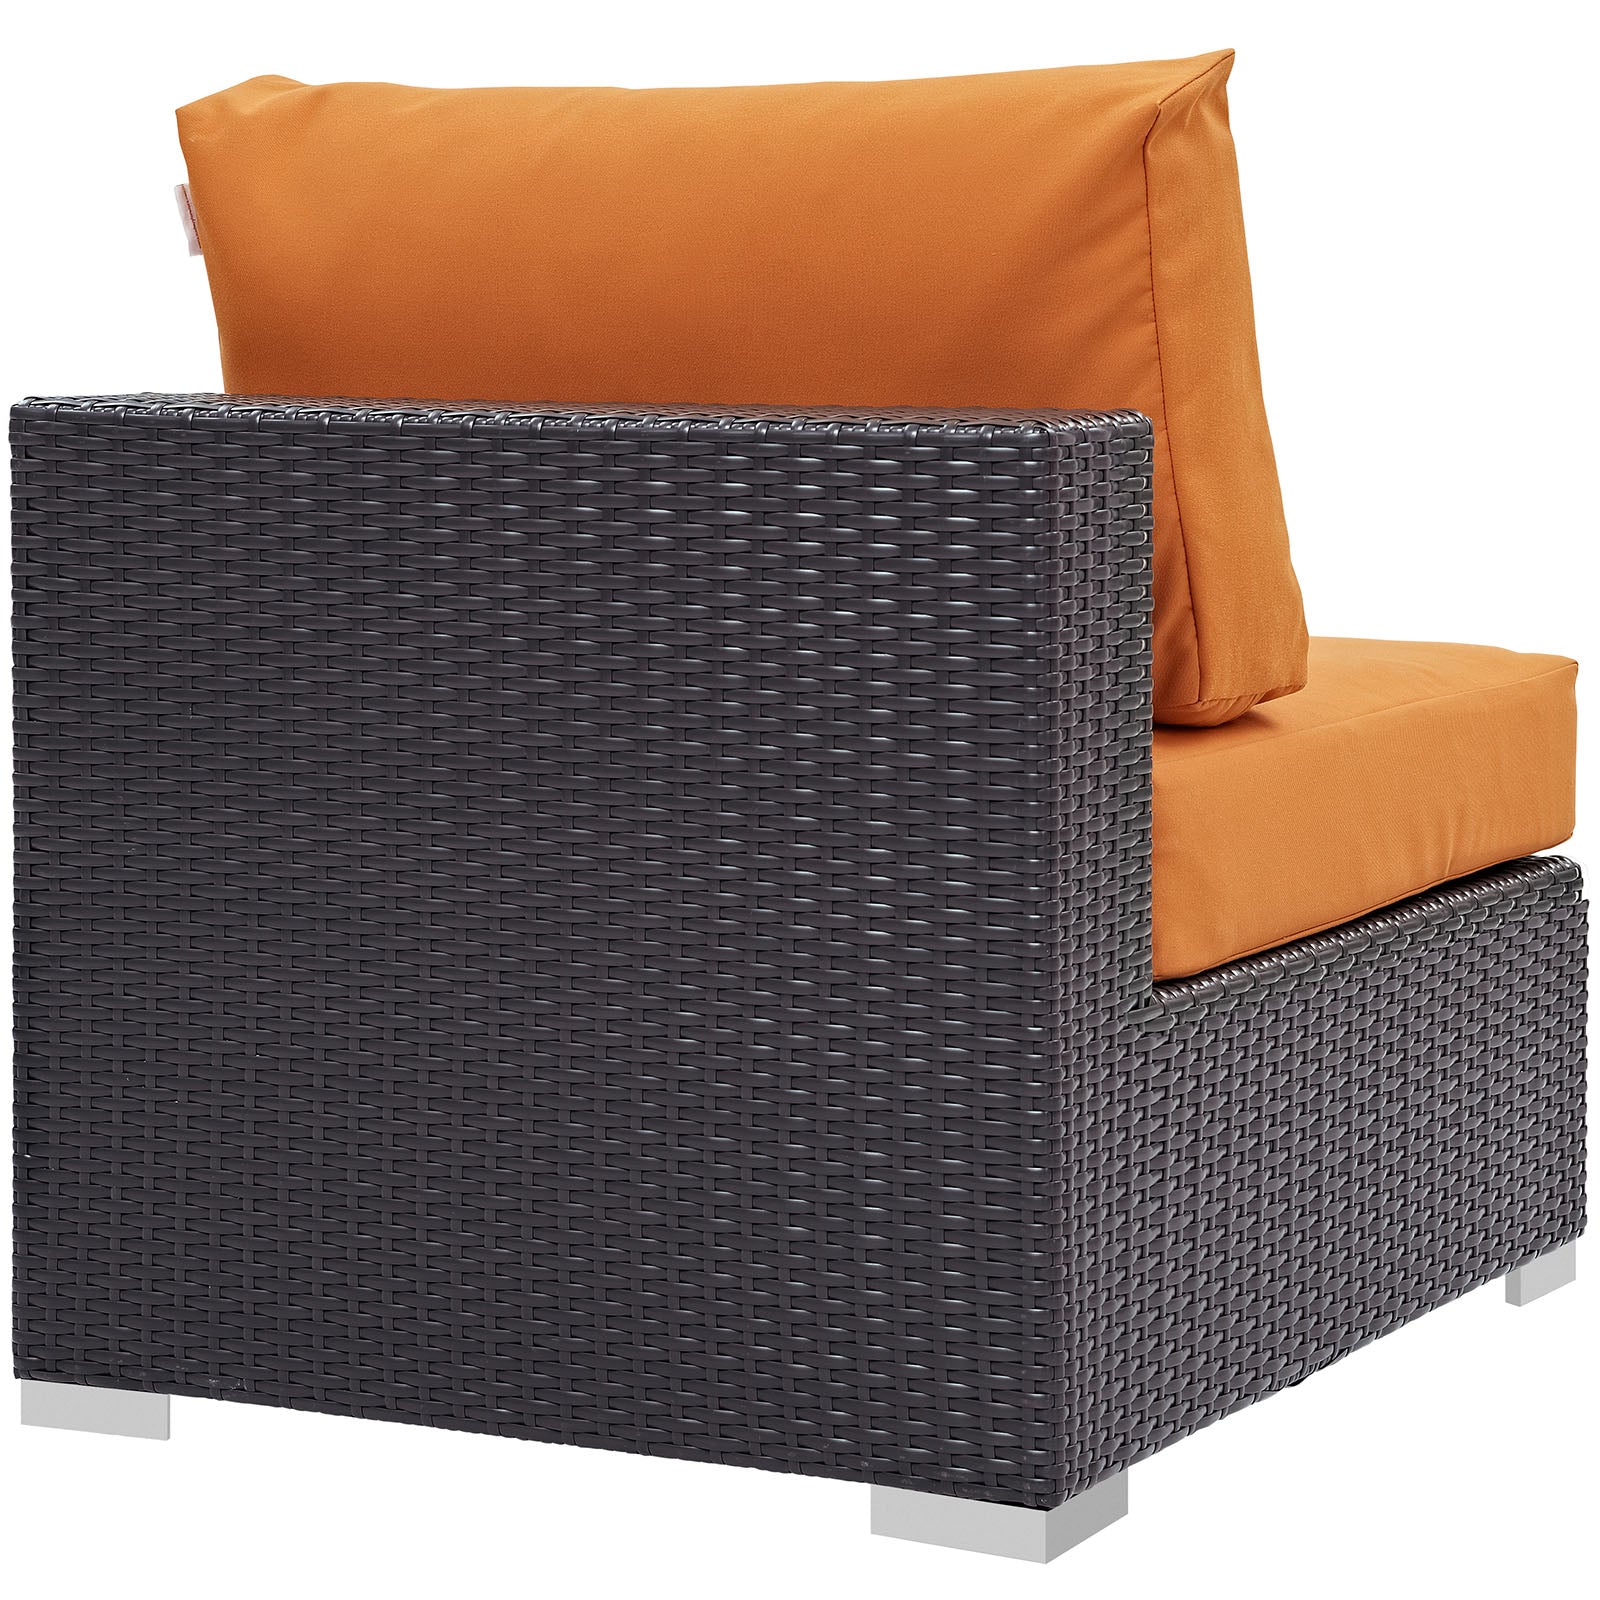 Modway Outdoor Chairs - Convene Outdoor Patio Armless Chair Espresso & Orange